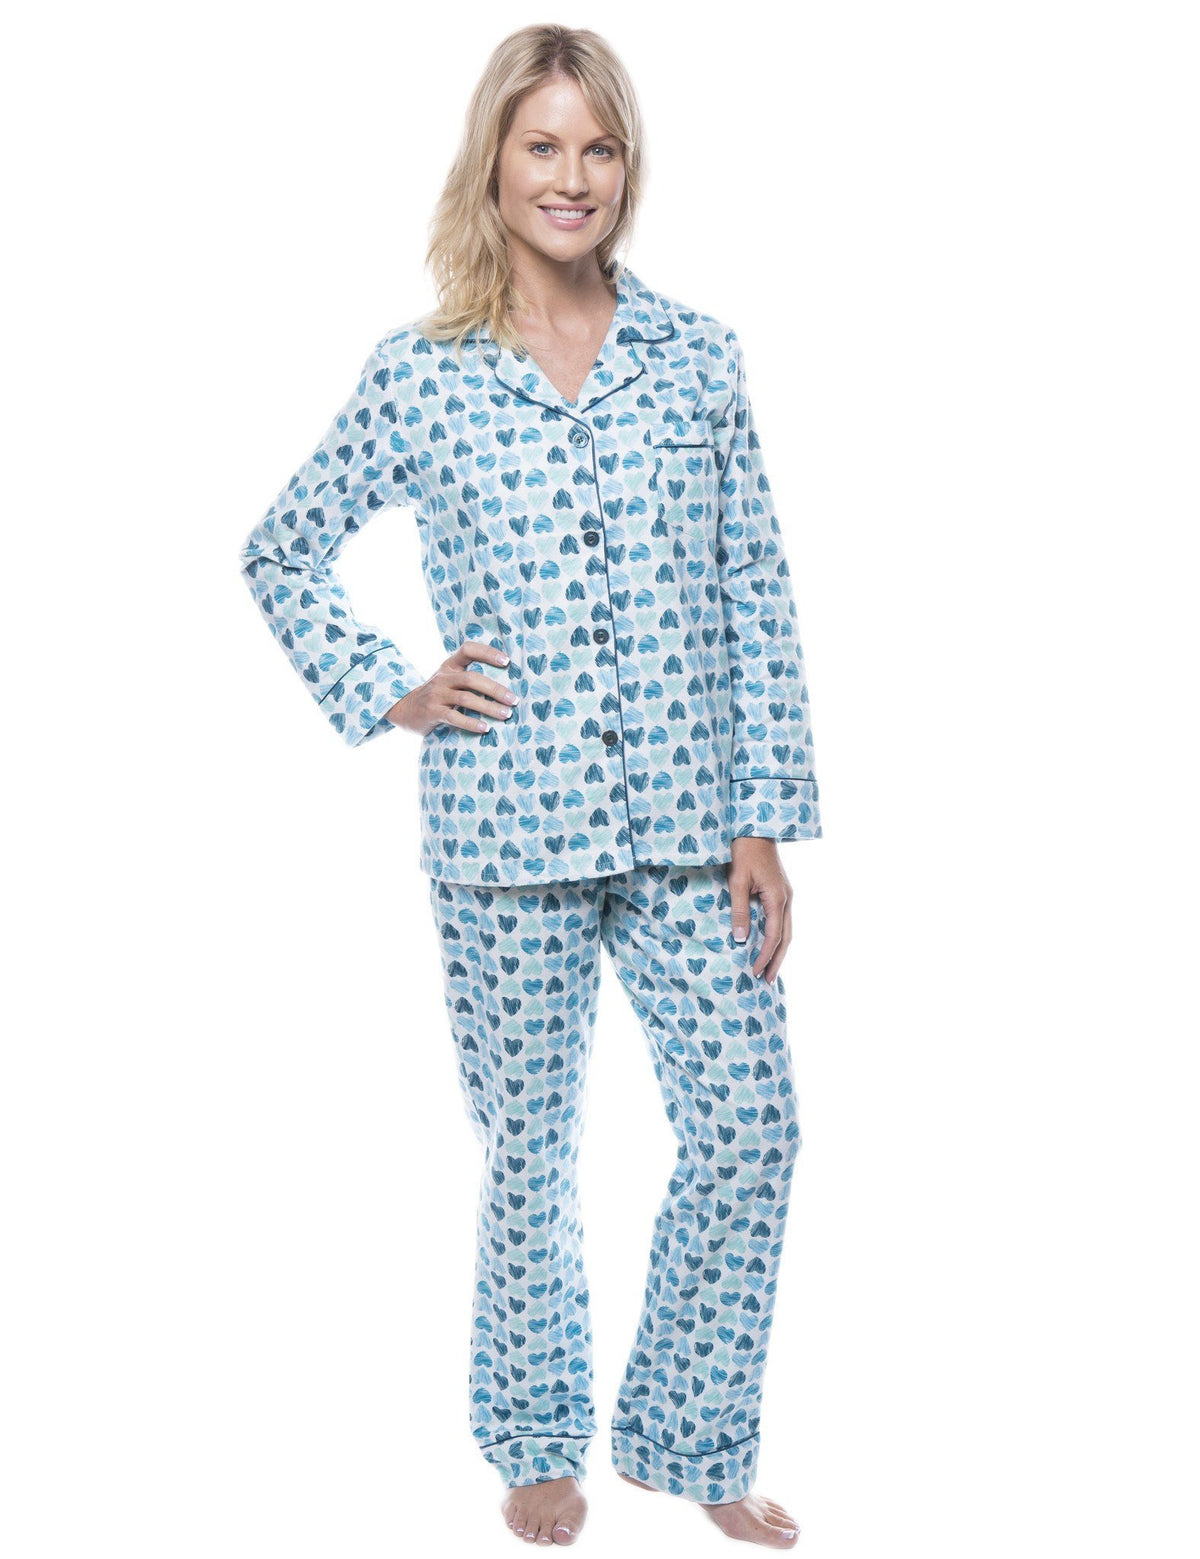 Women's 100% Cotton Flannel Pajama Sleepwear Set - Scribbled Hearts White/Blue